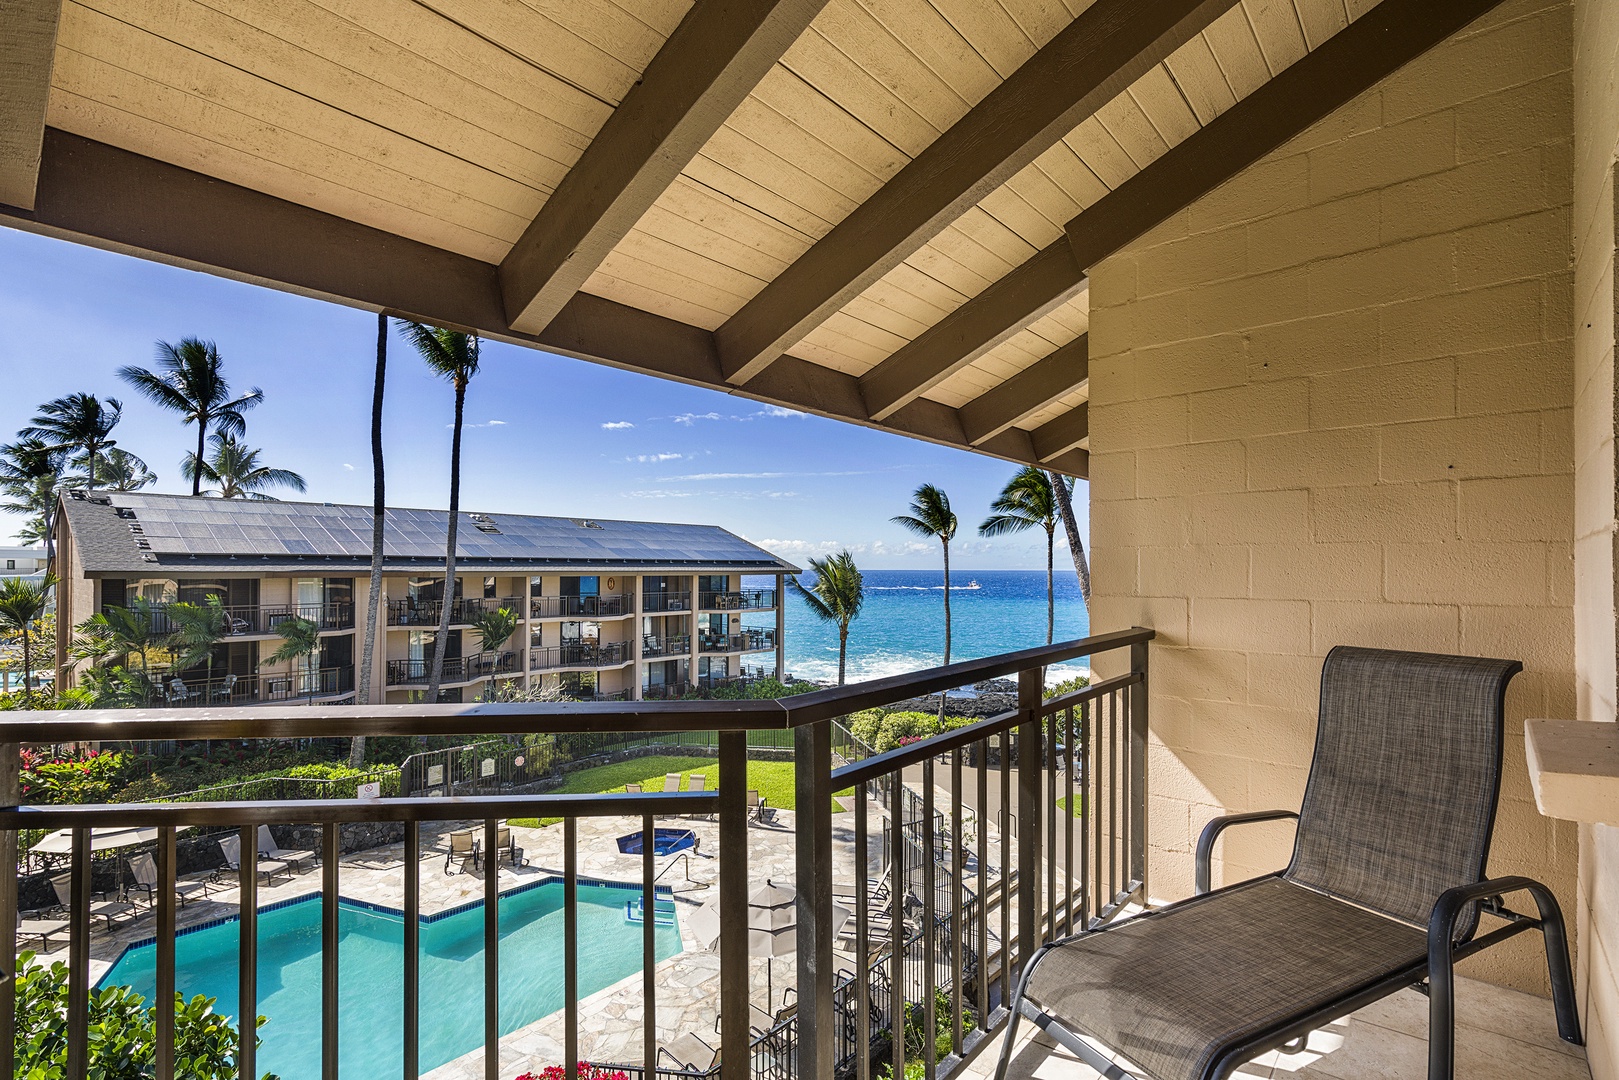 Kailua Kona Vacation Rentals, Kona Makai 6305 - Lounge on the Lanai and take in the tropical weather!